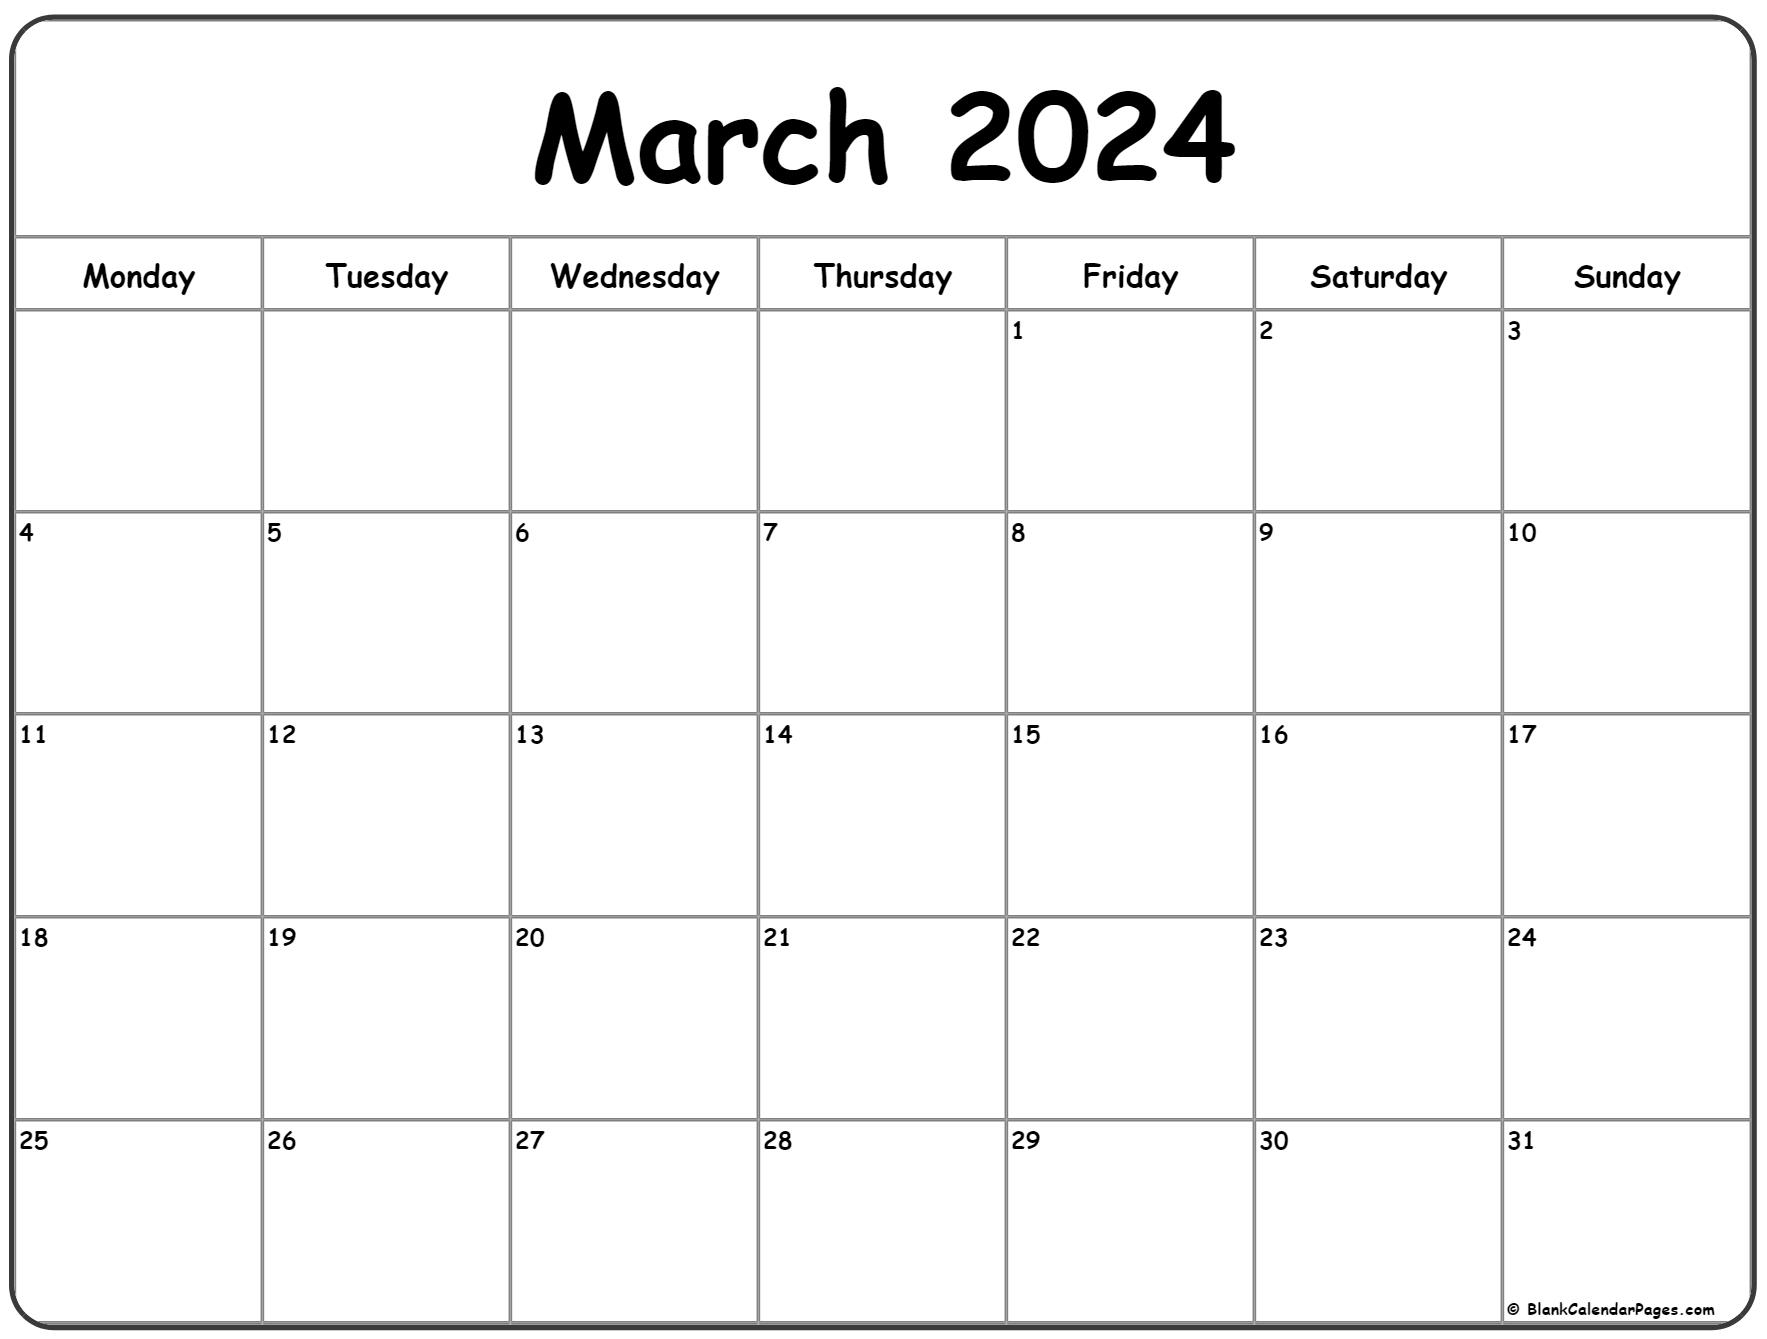 March 2024 Monday Calendar | Monday To Sunday for Blank Calendar Printable March 2024